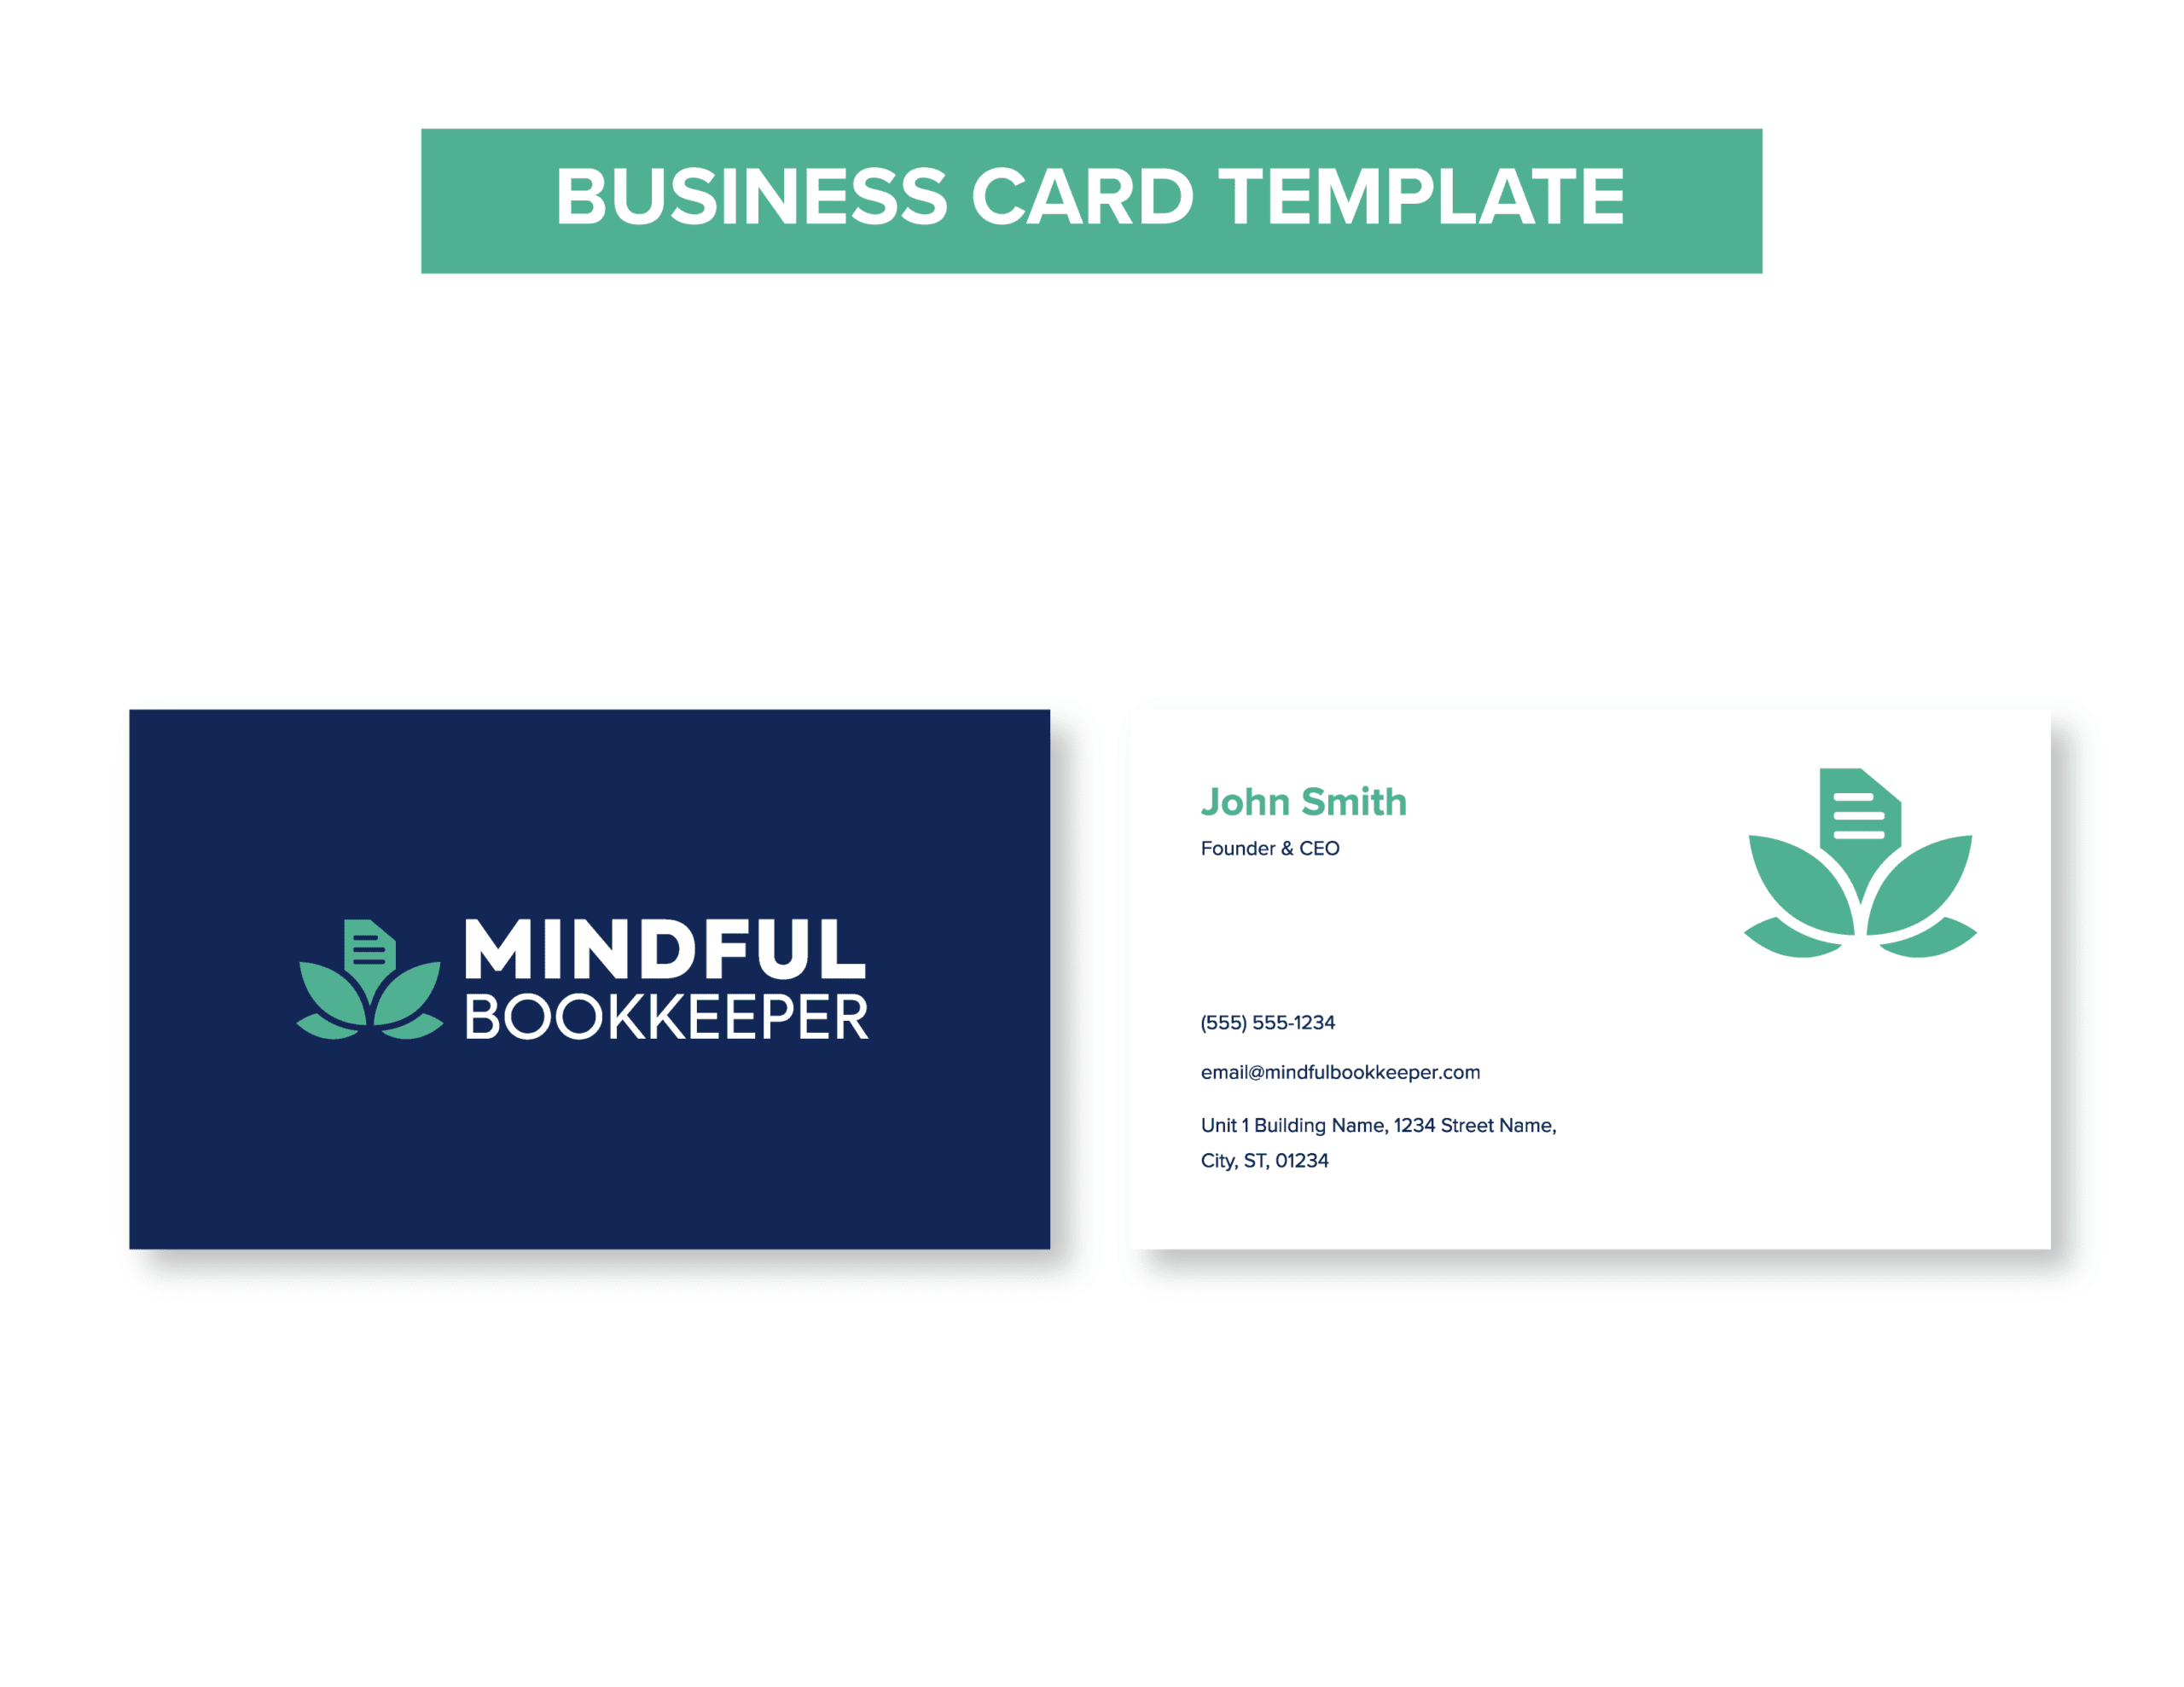 04MindfulBK__Business Card Template